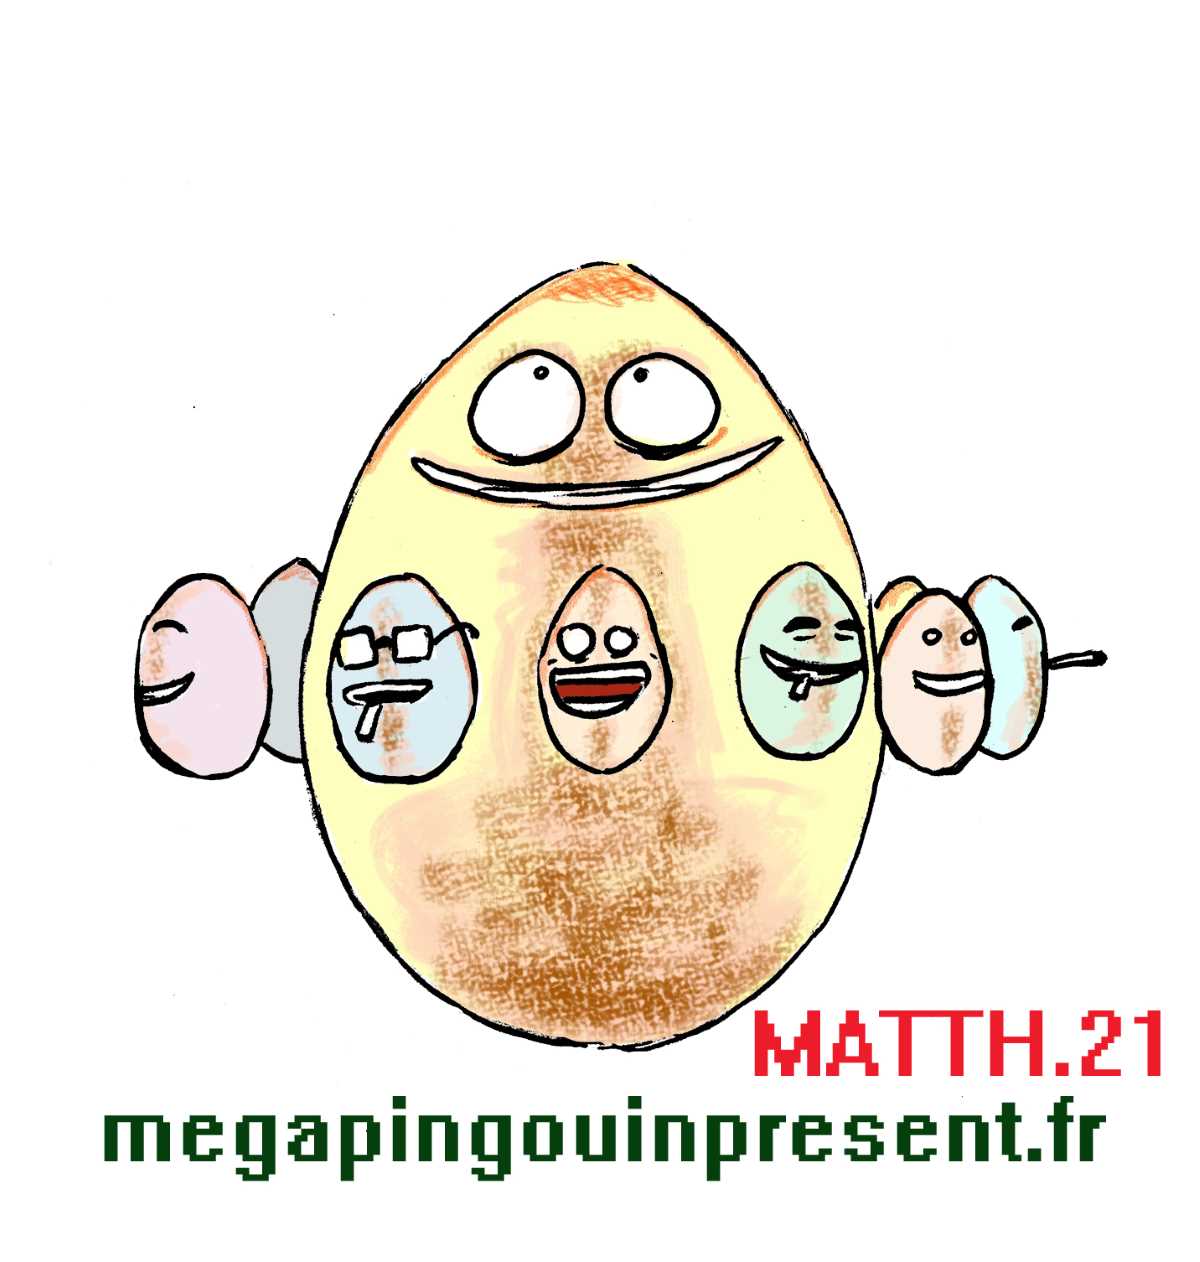 megapingouin-present-illustrations-calice-club-egg propag